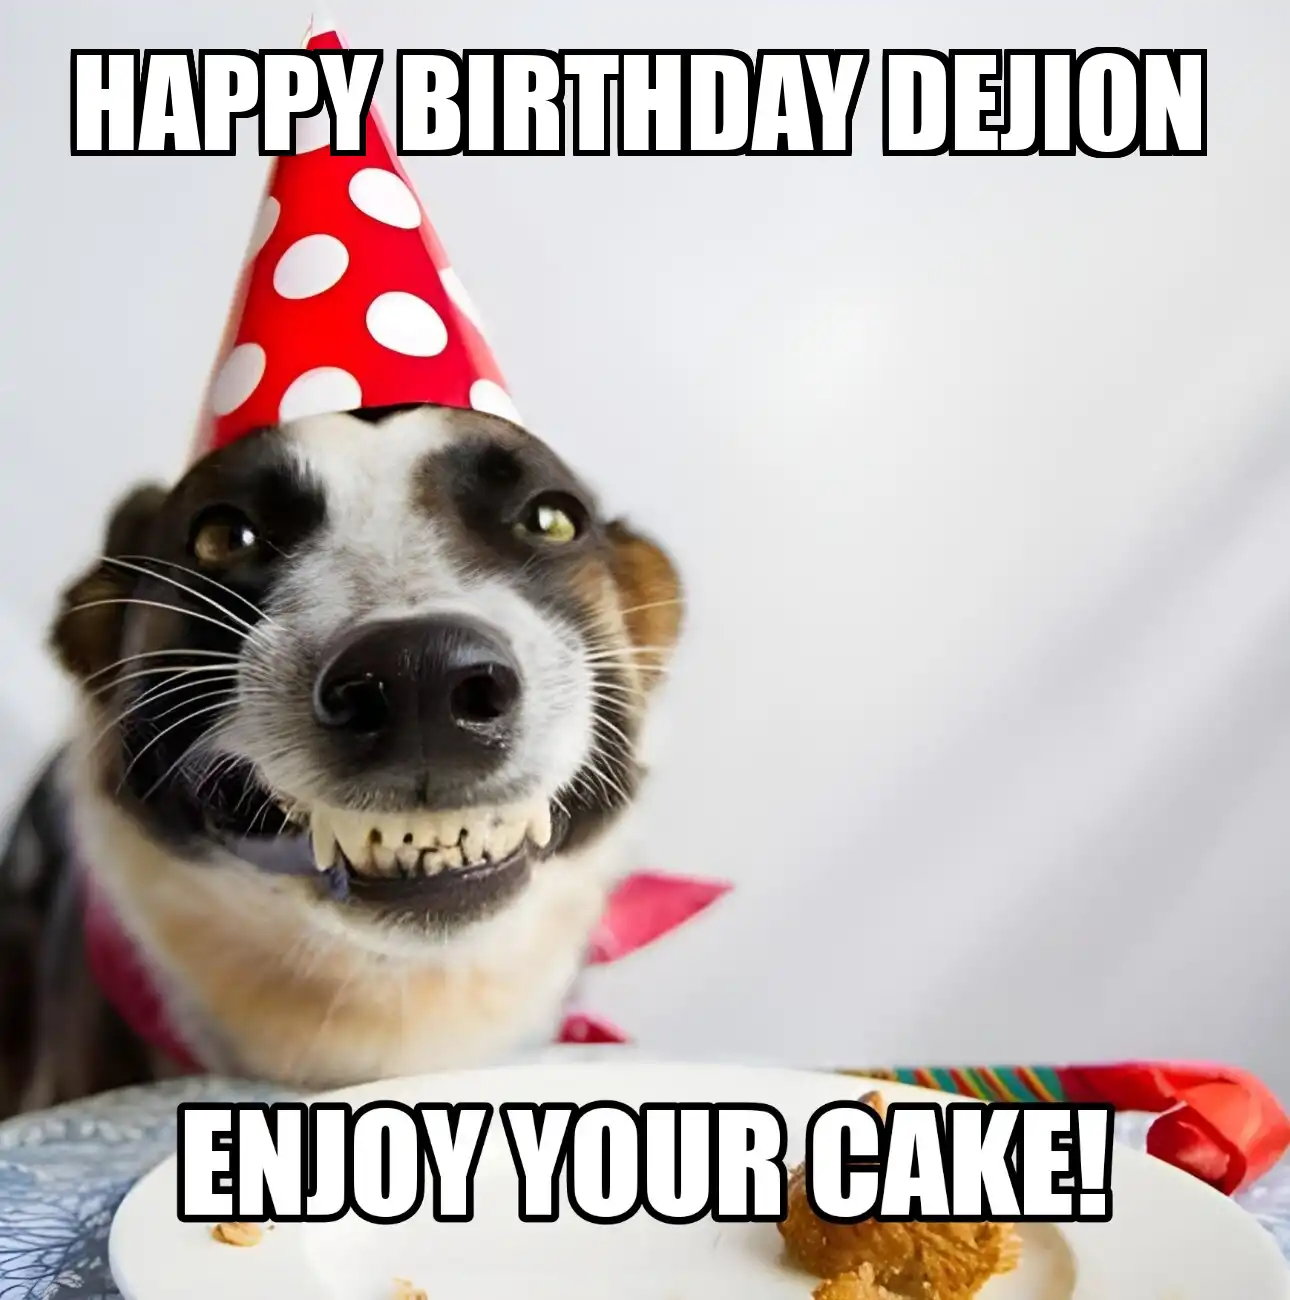 Happy Birthday Dejion Enjoy Your Cake Dog Meme